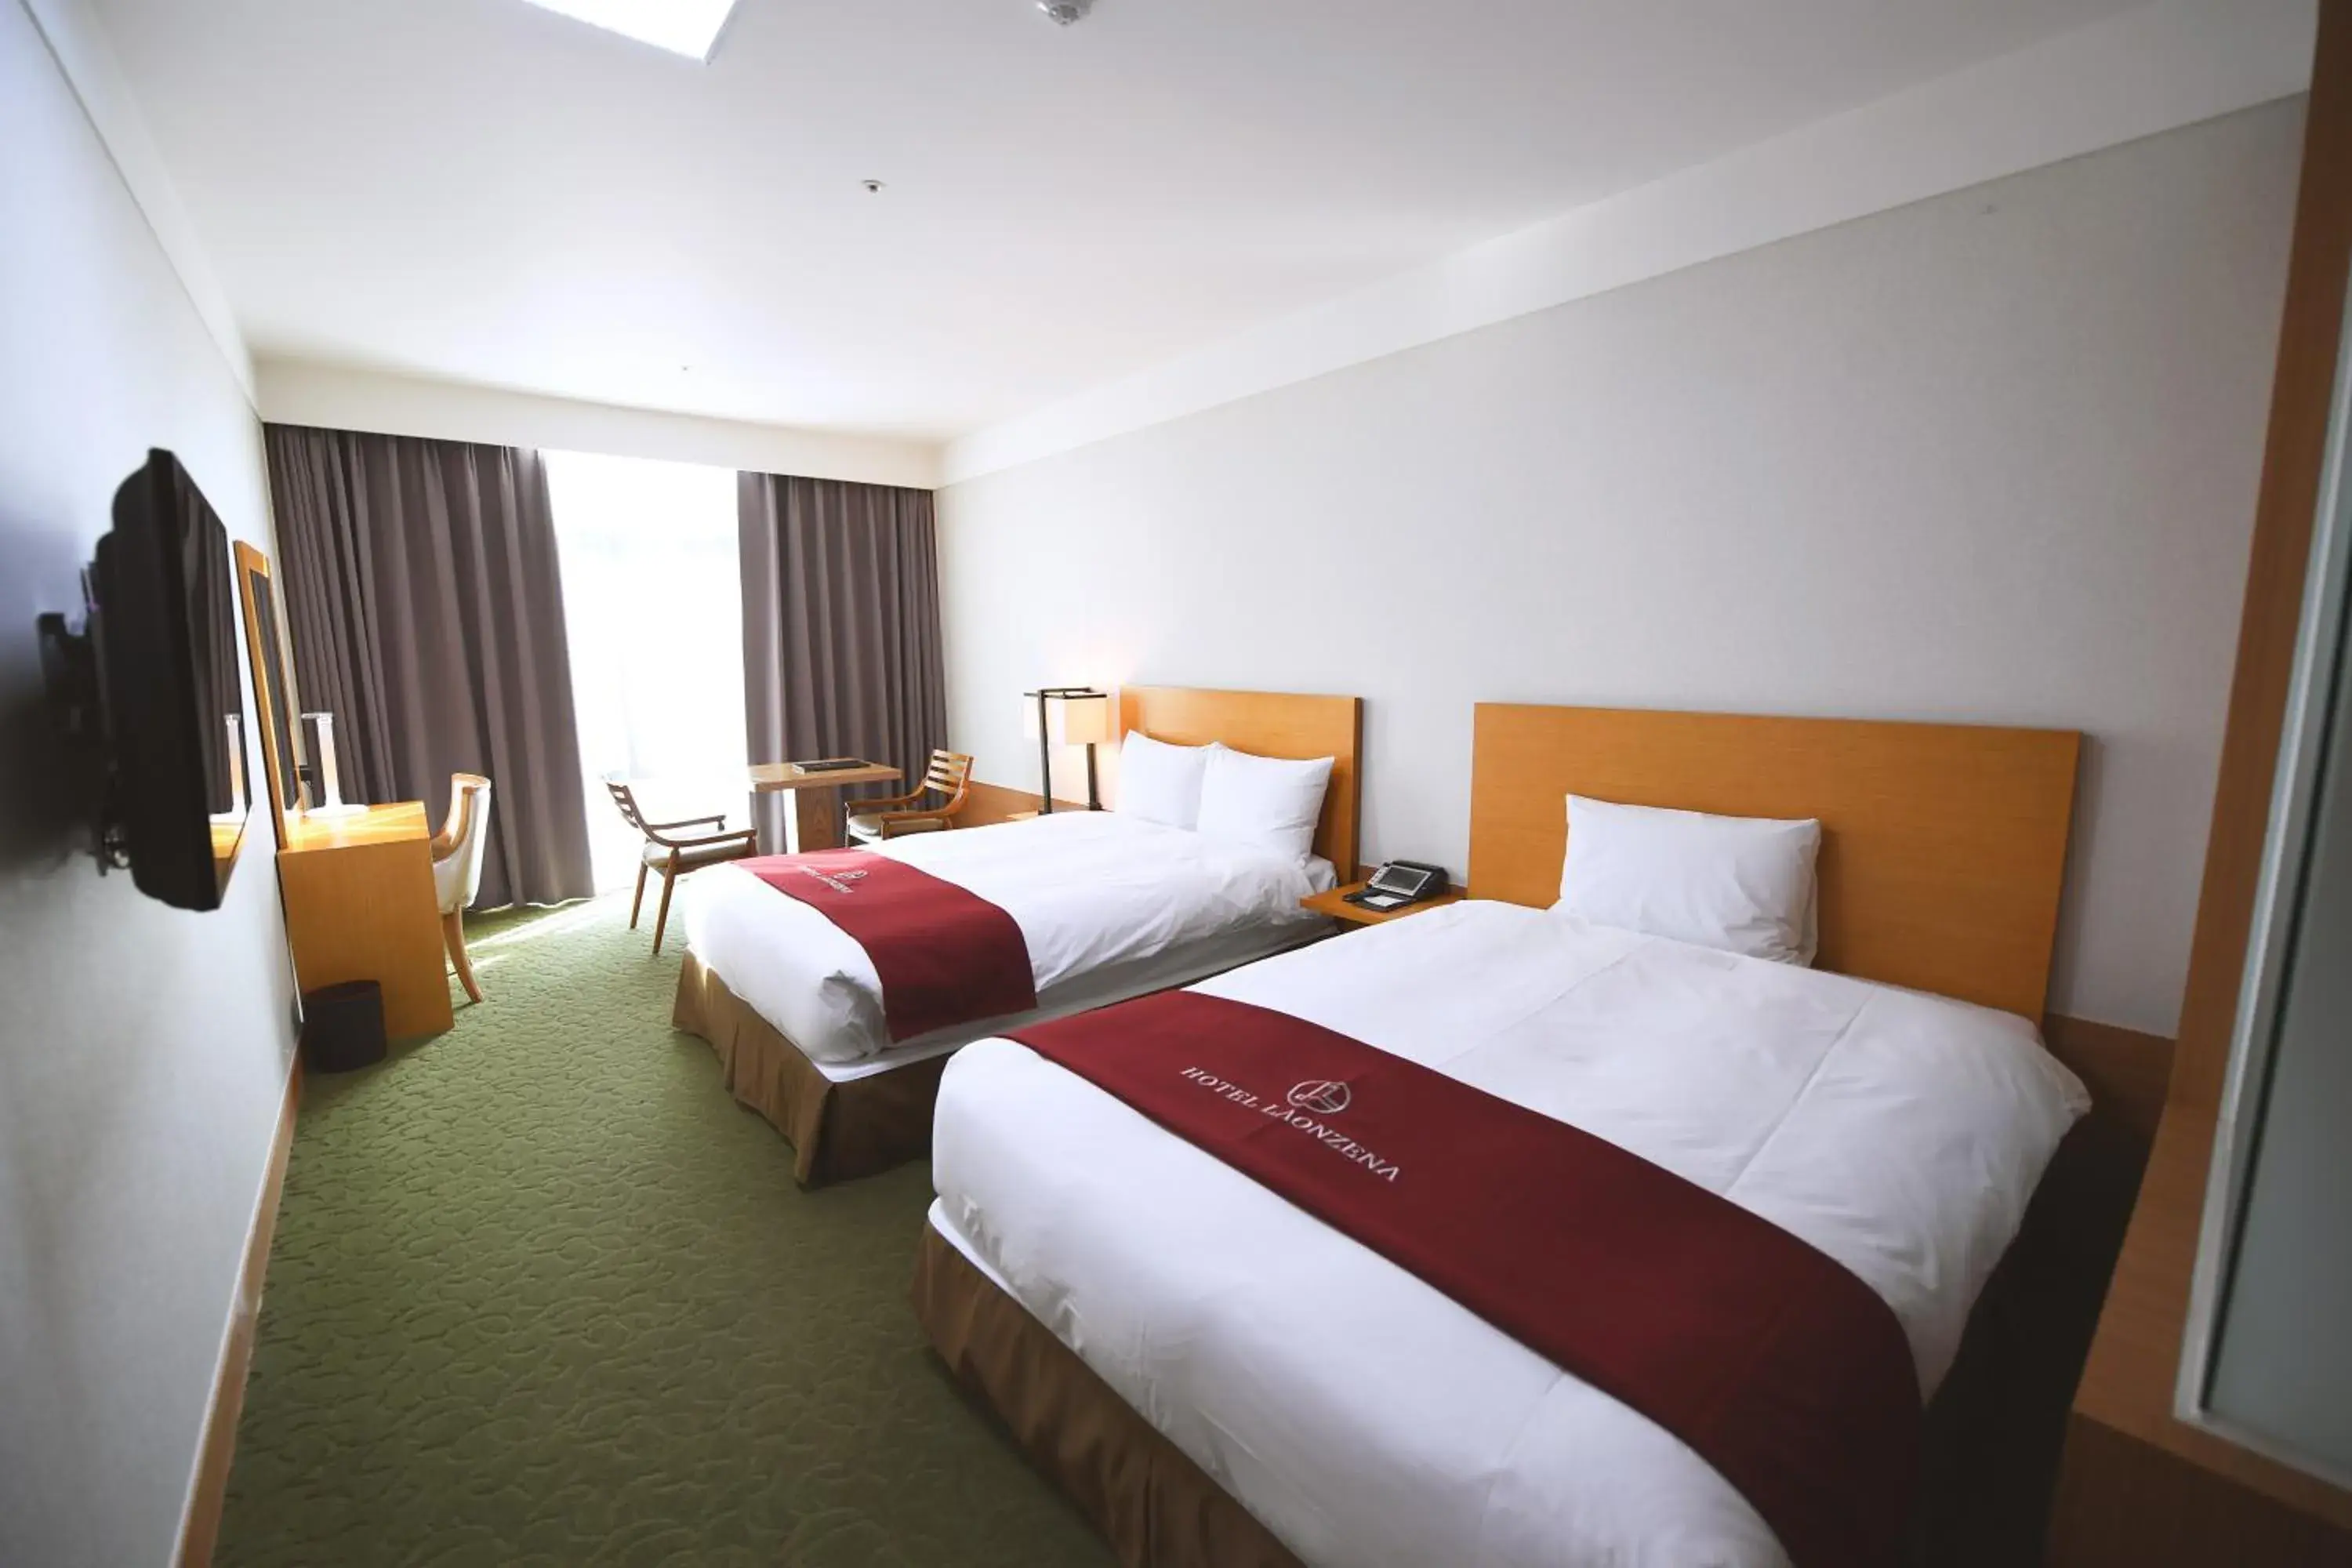 Bed in Hotel Laonzena